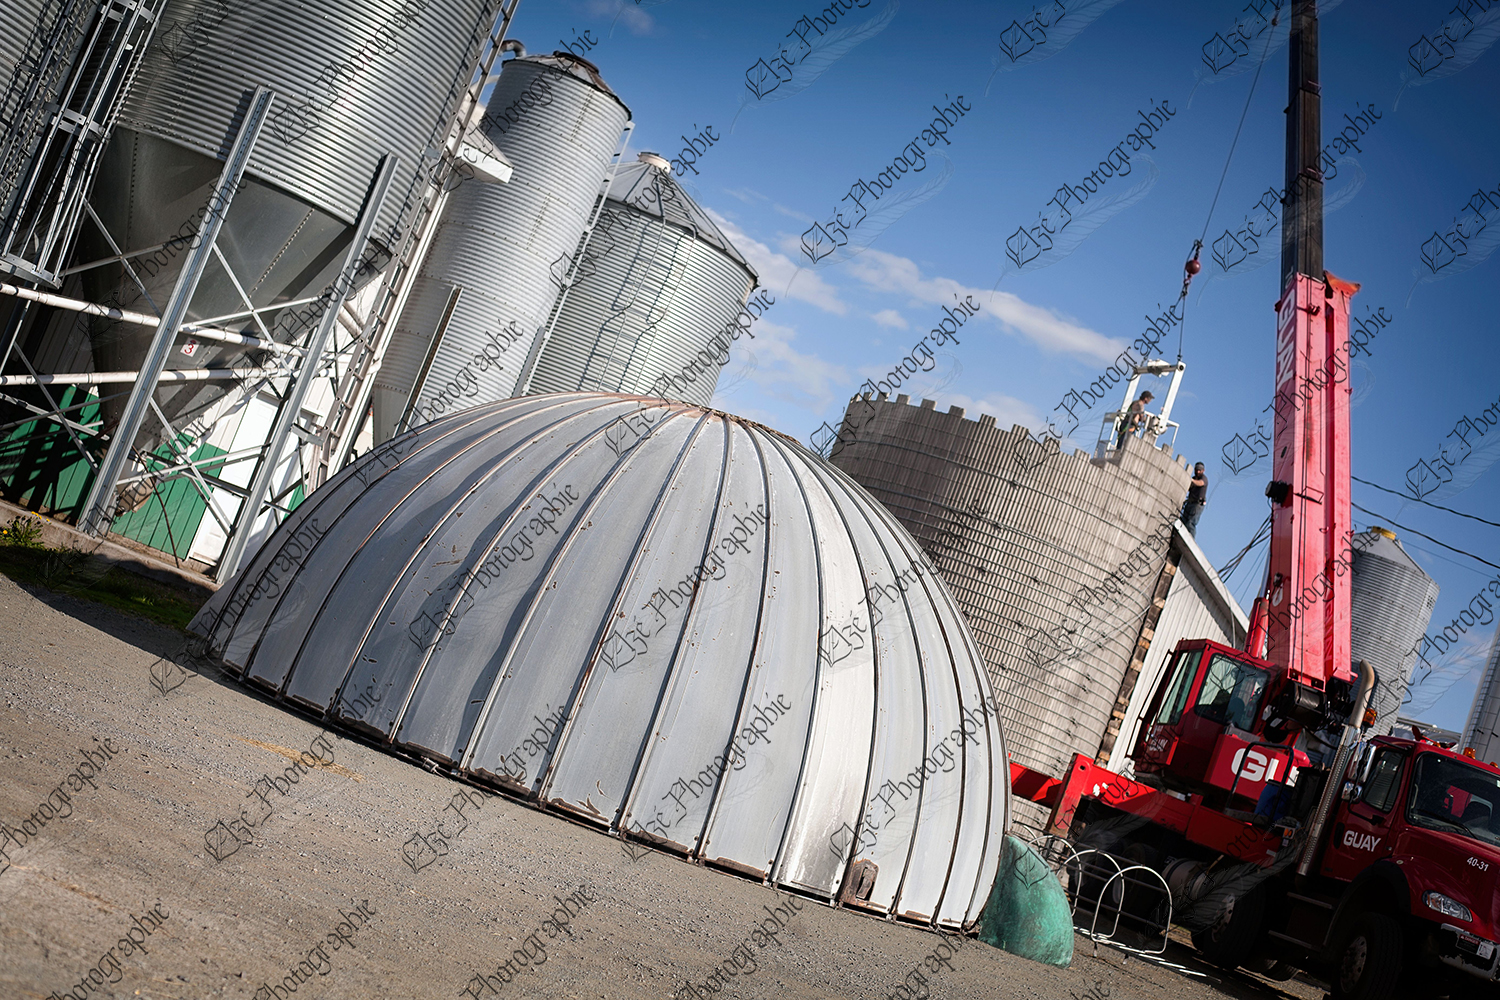 elze_photo_1153_grue_silos_toit_dairy_farm_silos